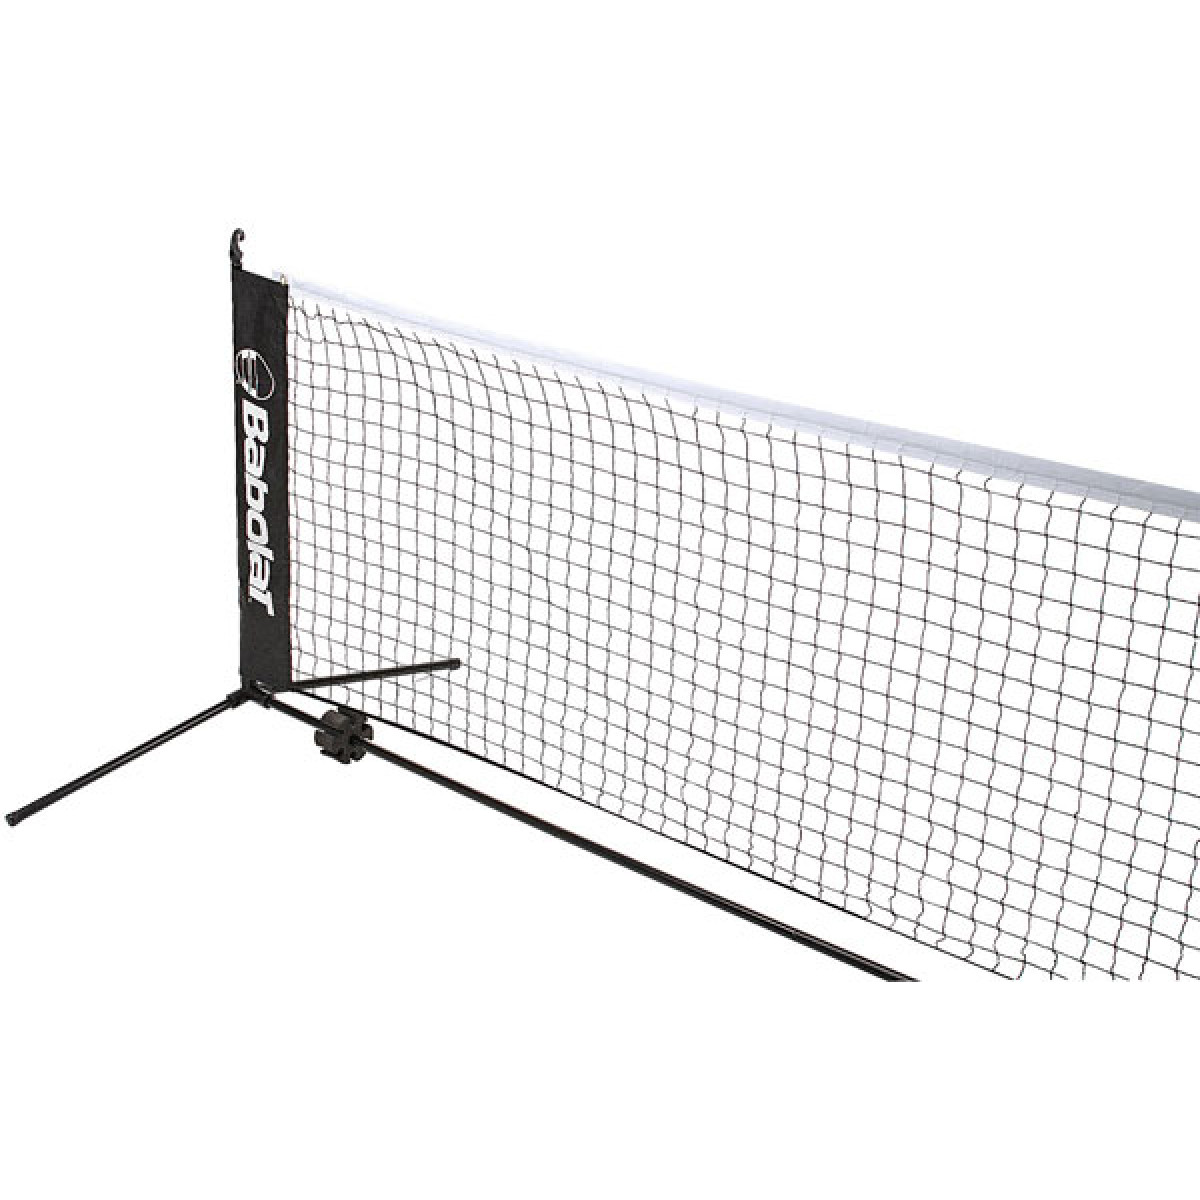 Filet mini tennis sans noeud en polypropylène Ø3mm noir. Longueur 6m